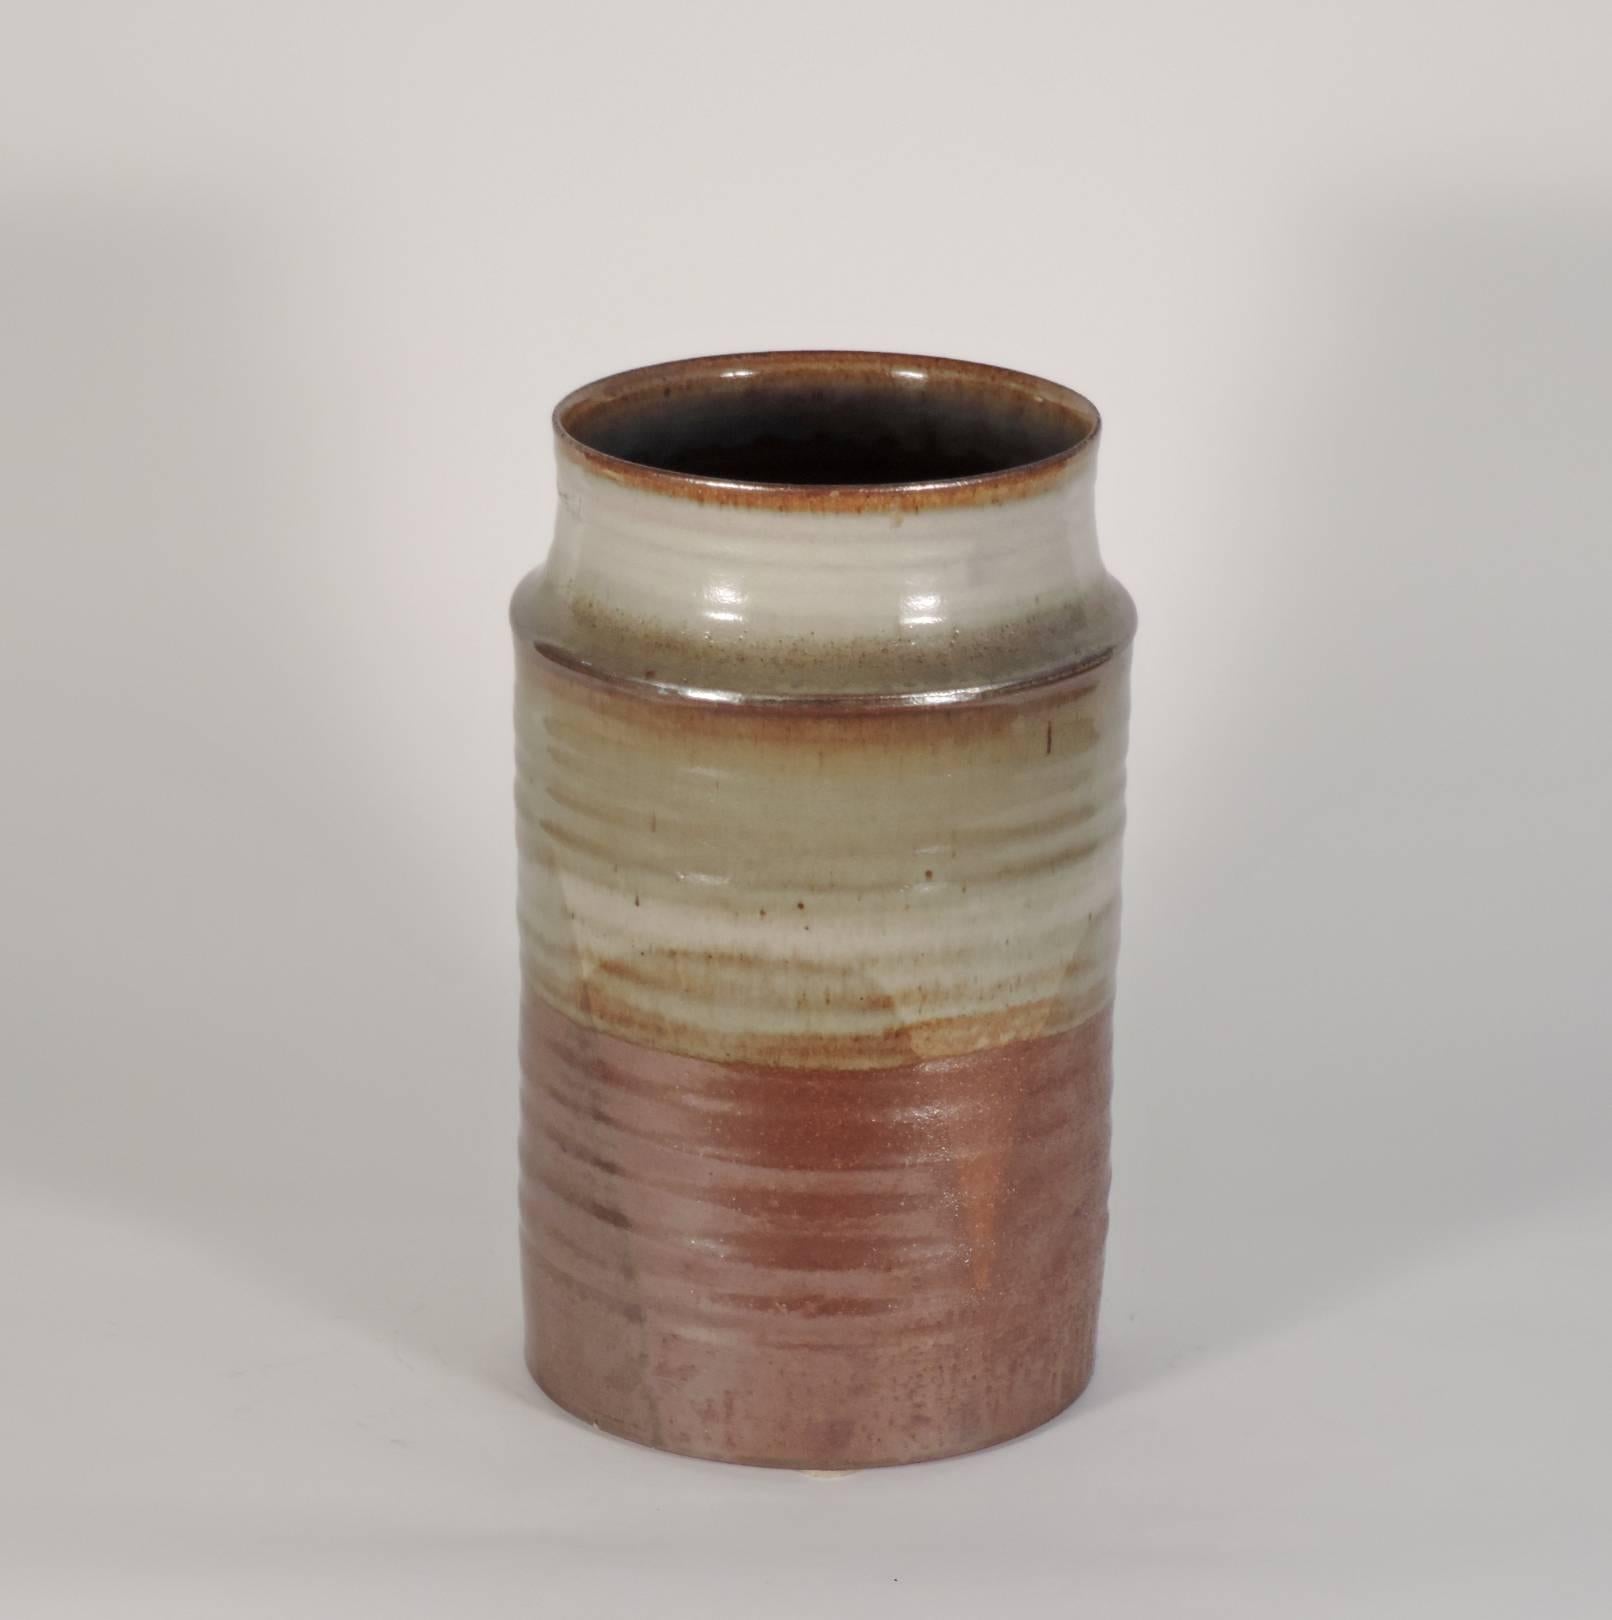 Large ceramic vase by Nanni Valentini for Ceramica Arcore.
Signed CA.